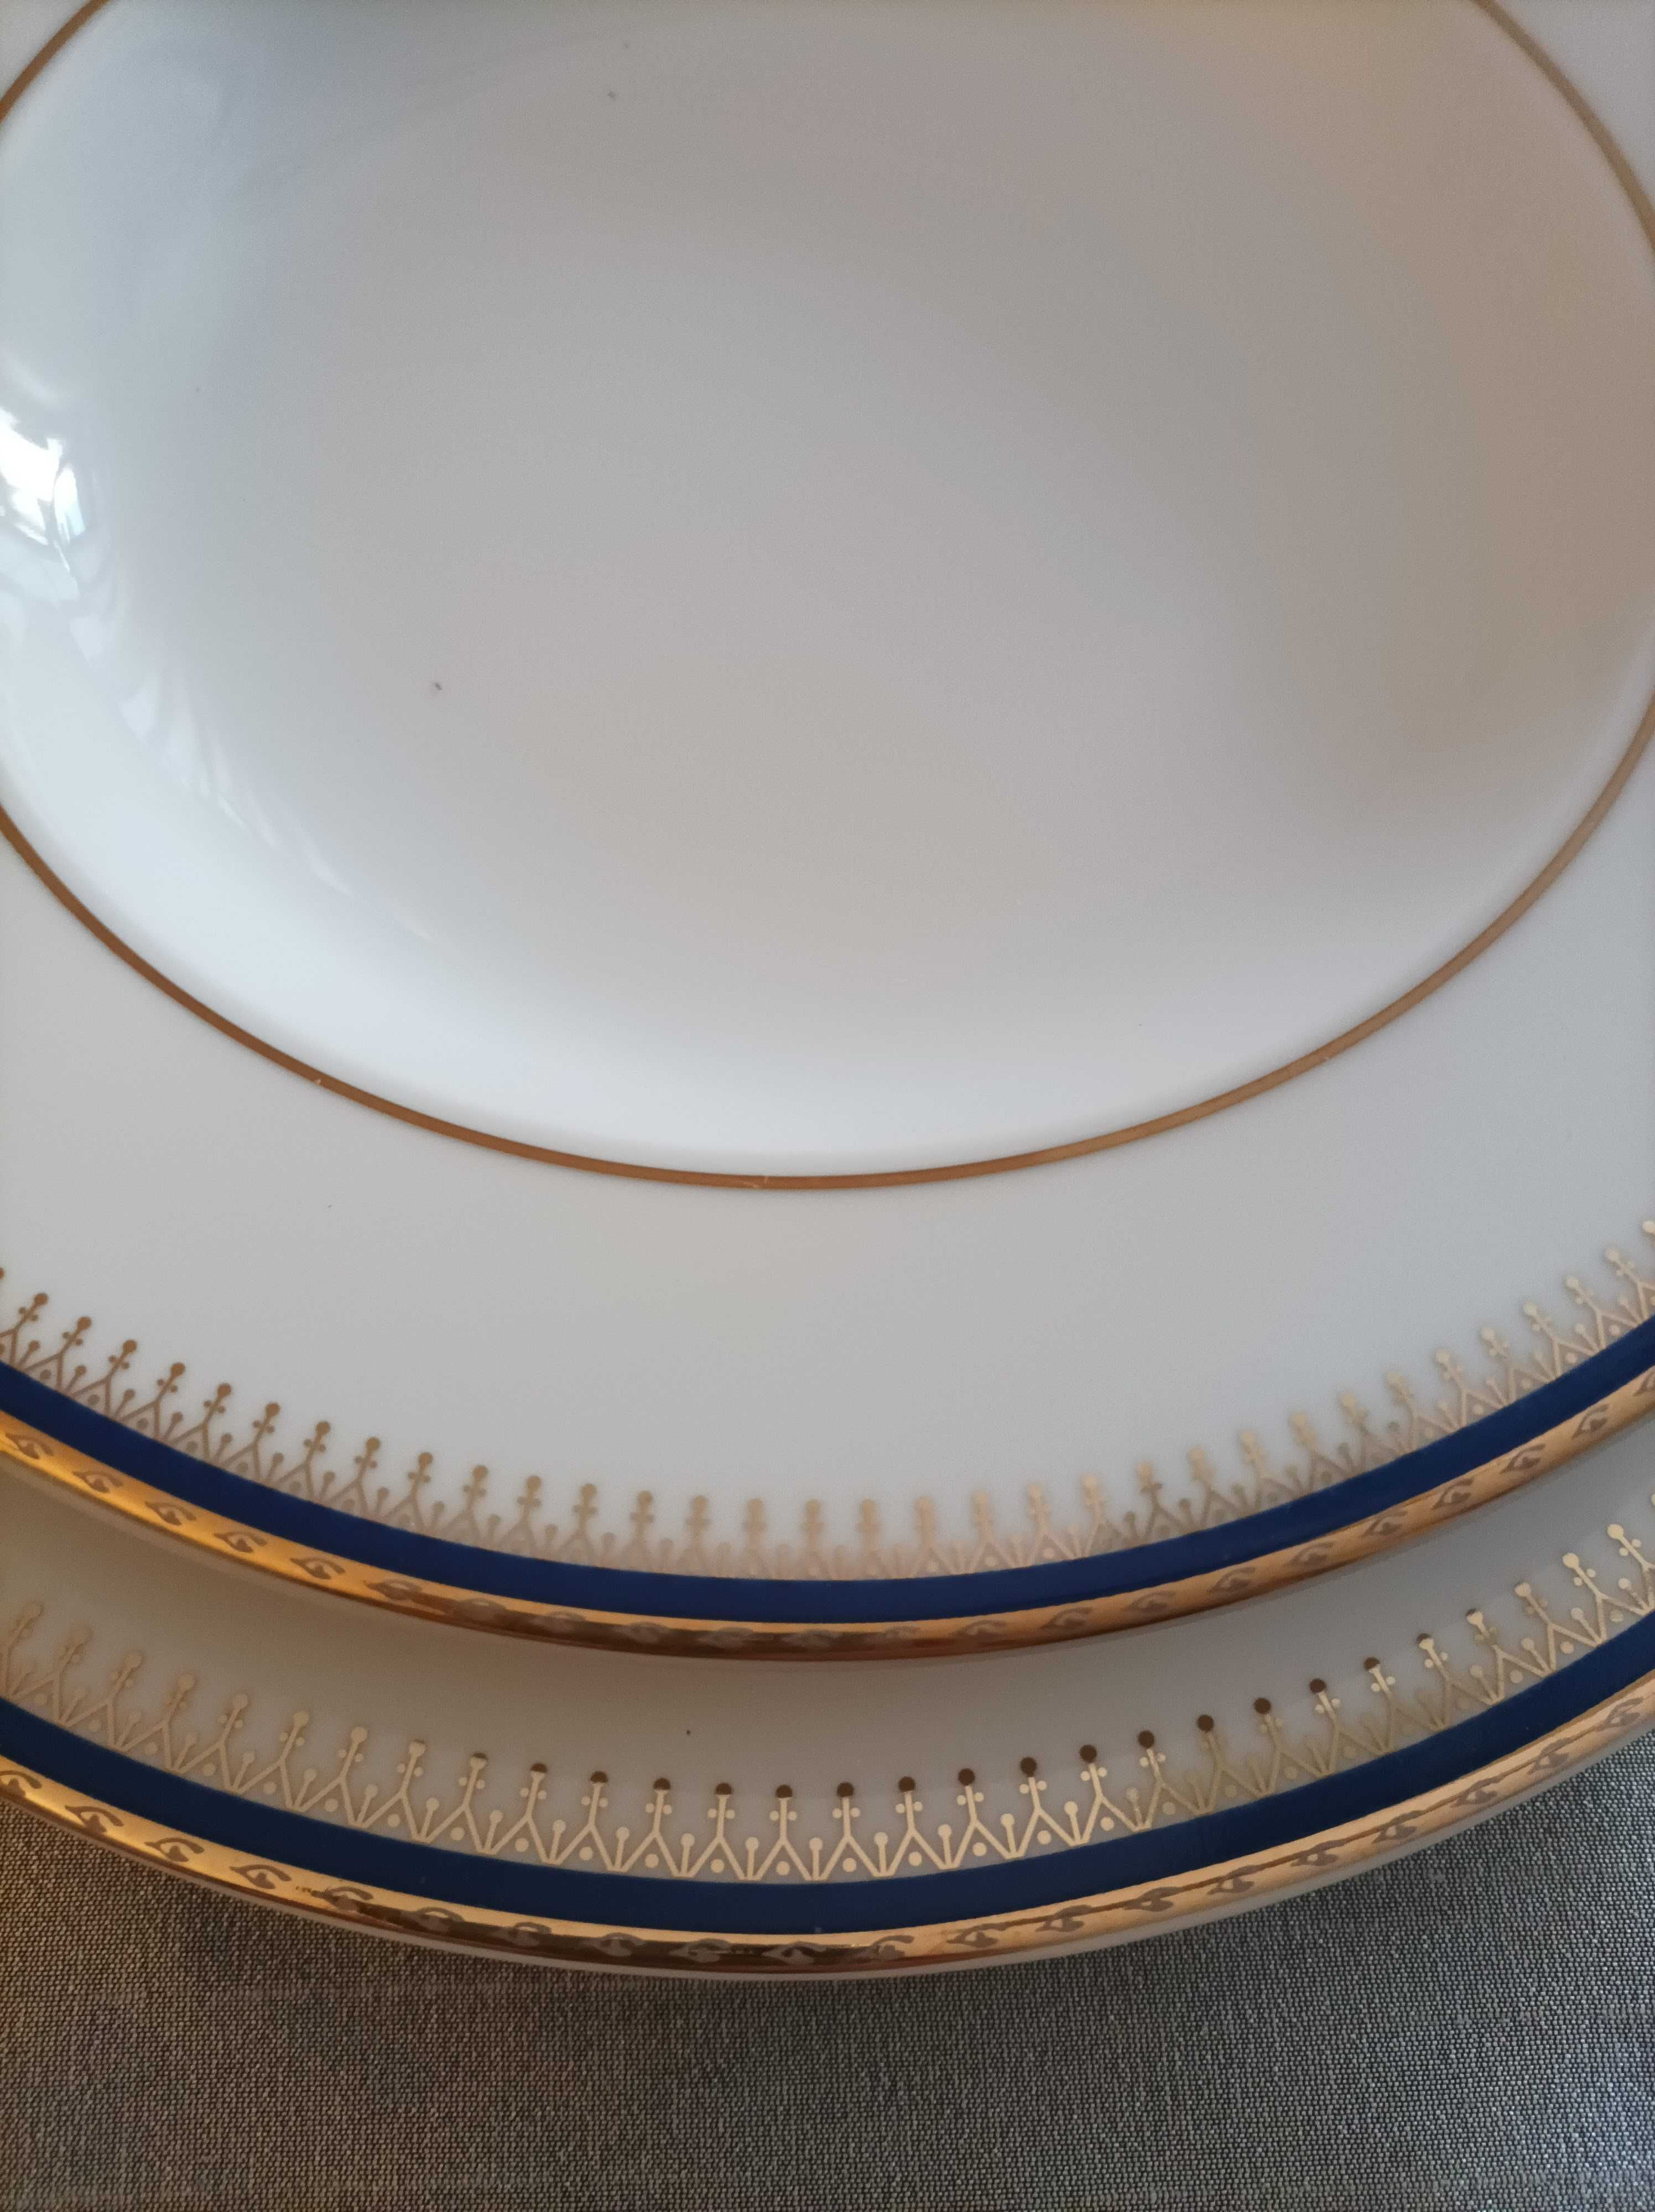 PALACE AZUL - Elegante Serviço Porcelana Fina (41 PÇS)